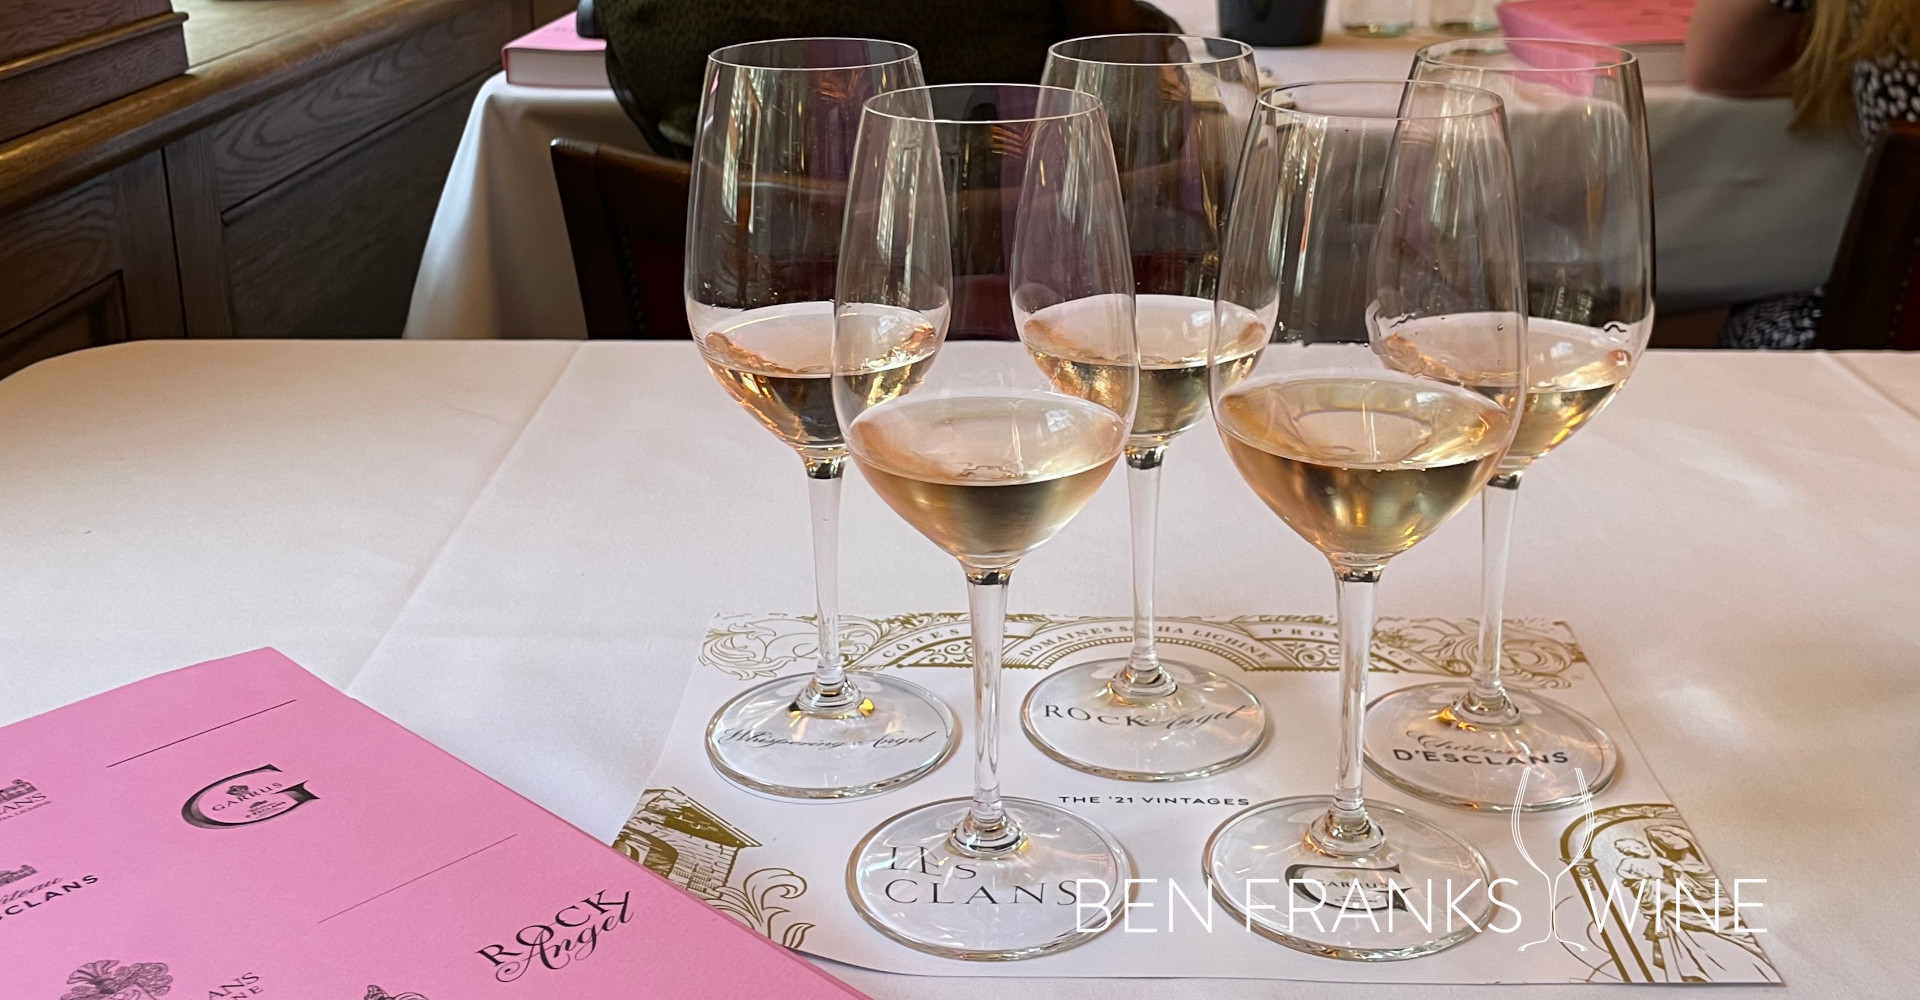 Jessica Summer enjoys a rosé wine tasting flight at 34 Mayfair in London.